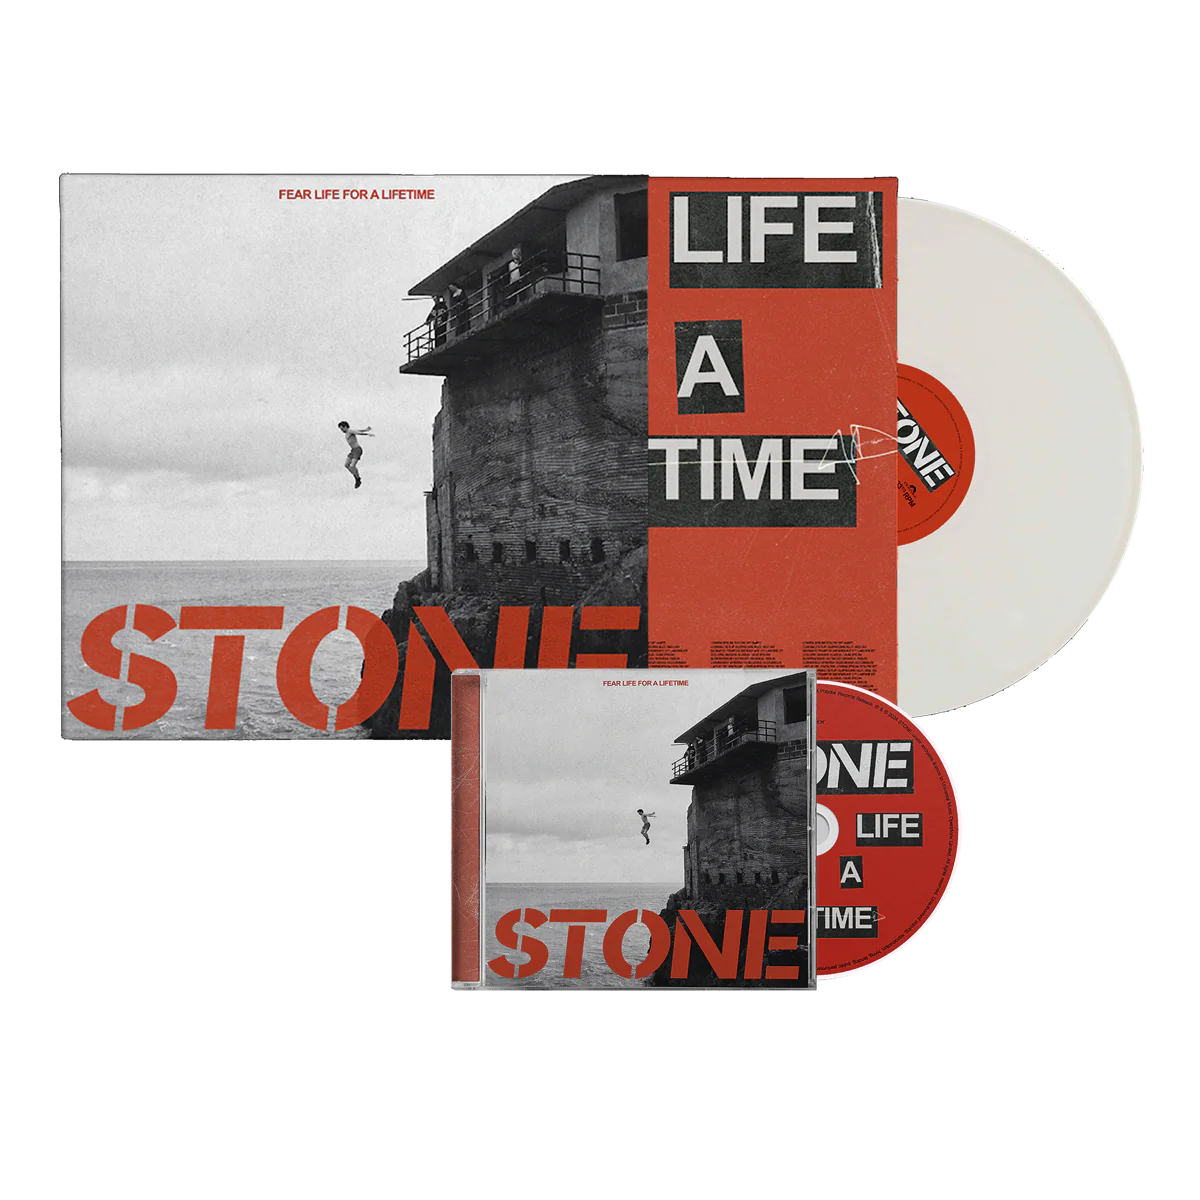 Fear Life For A Lifetime: White Vinyl LP + CD